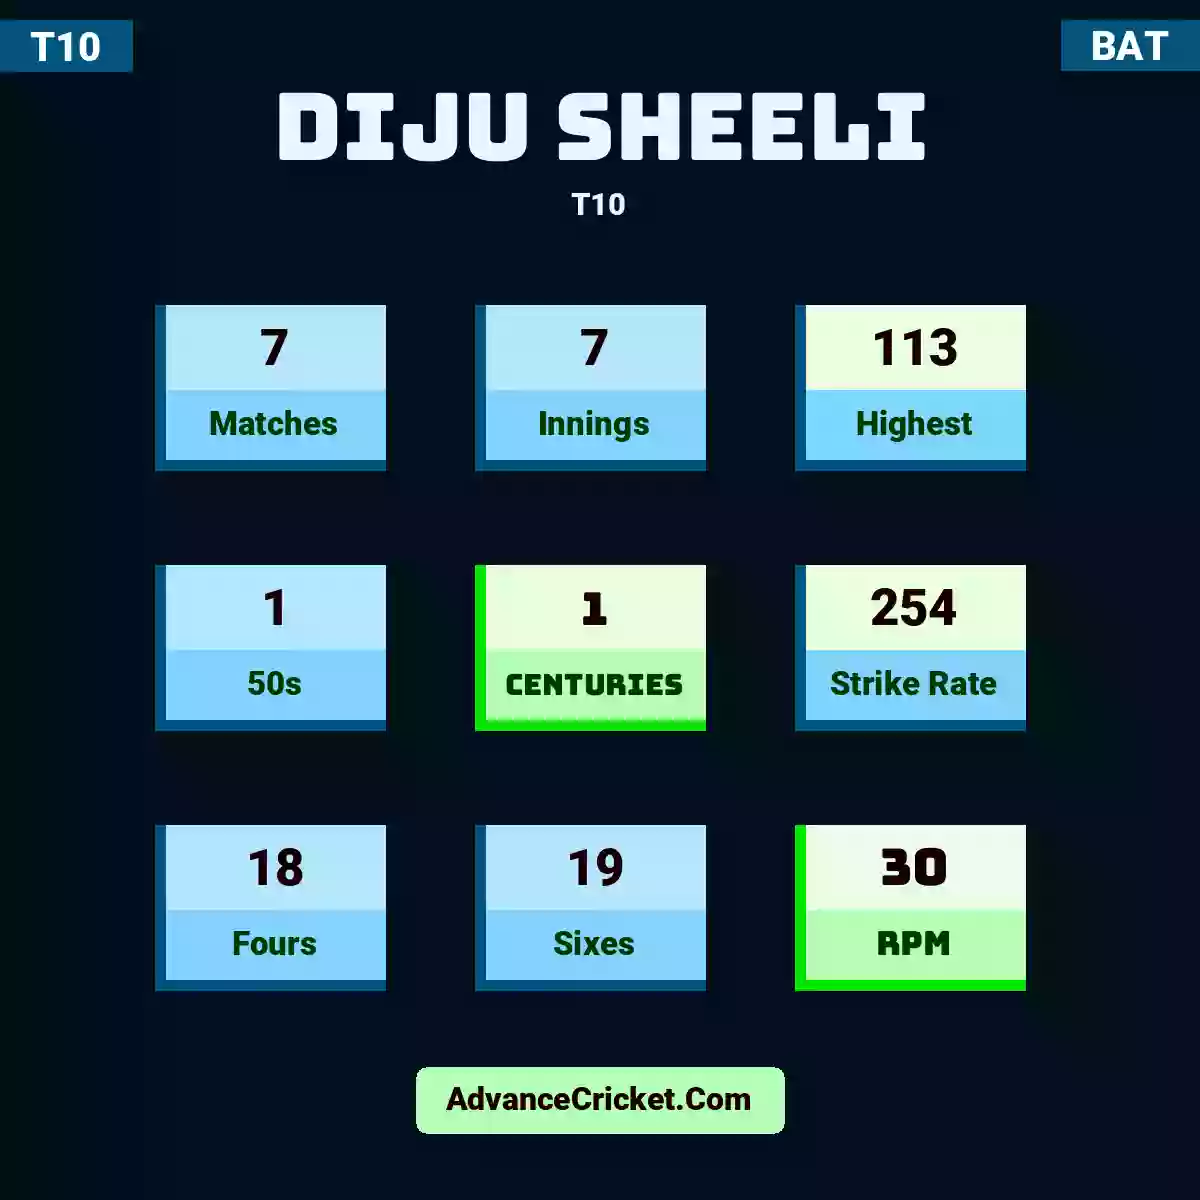 Diju Sheeli T10 , Diju Sheeli played 7 matches, scored 113 runs as highest, 1 half-centuries, and 1 centuries, with a strike rate of 254. D.Sheeli hit 18 fours and 19 sixes, with an RPM of 30.